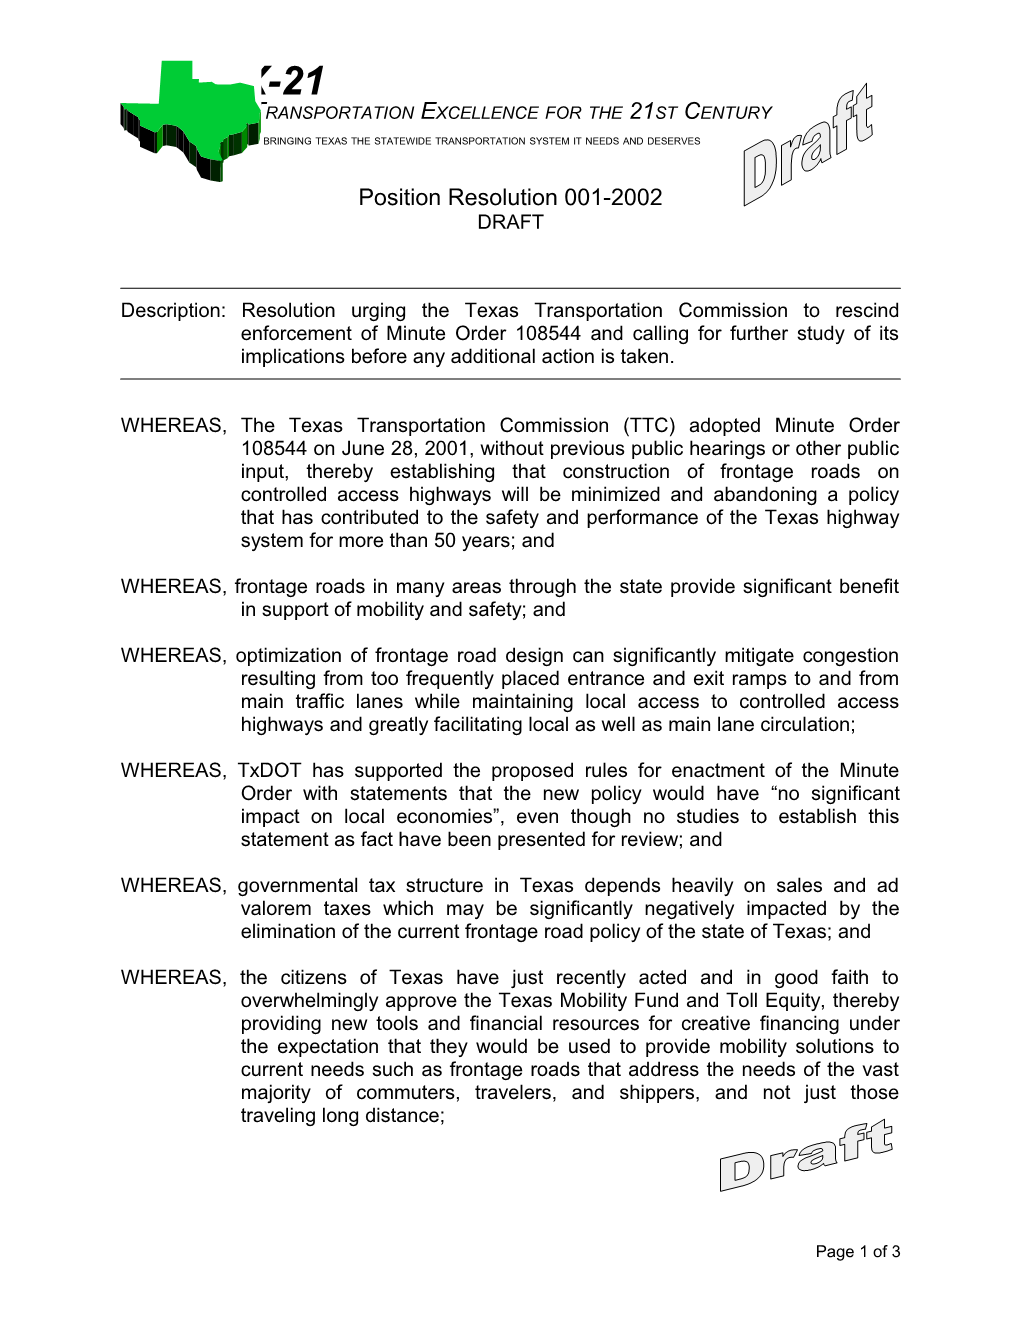 Description: Resolution Urging the Texas Transportation Commission to Rescind Enforcement